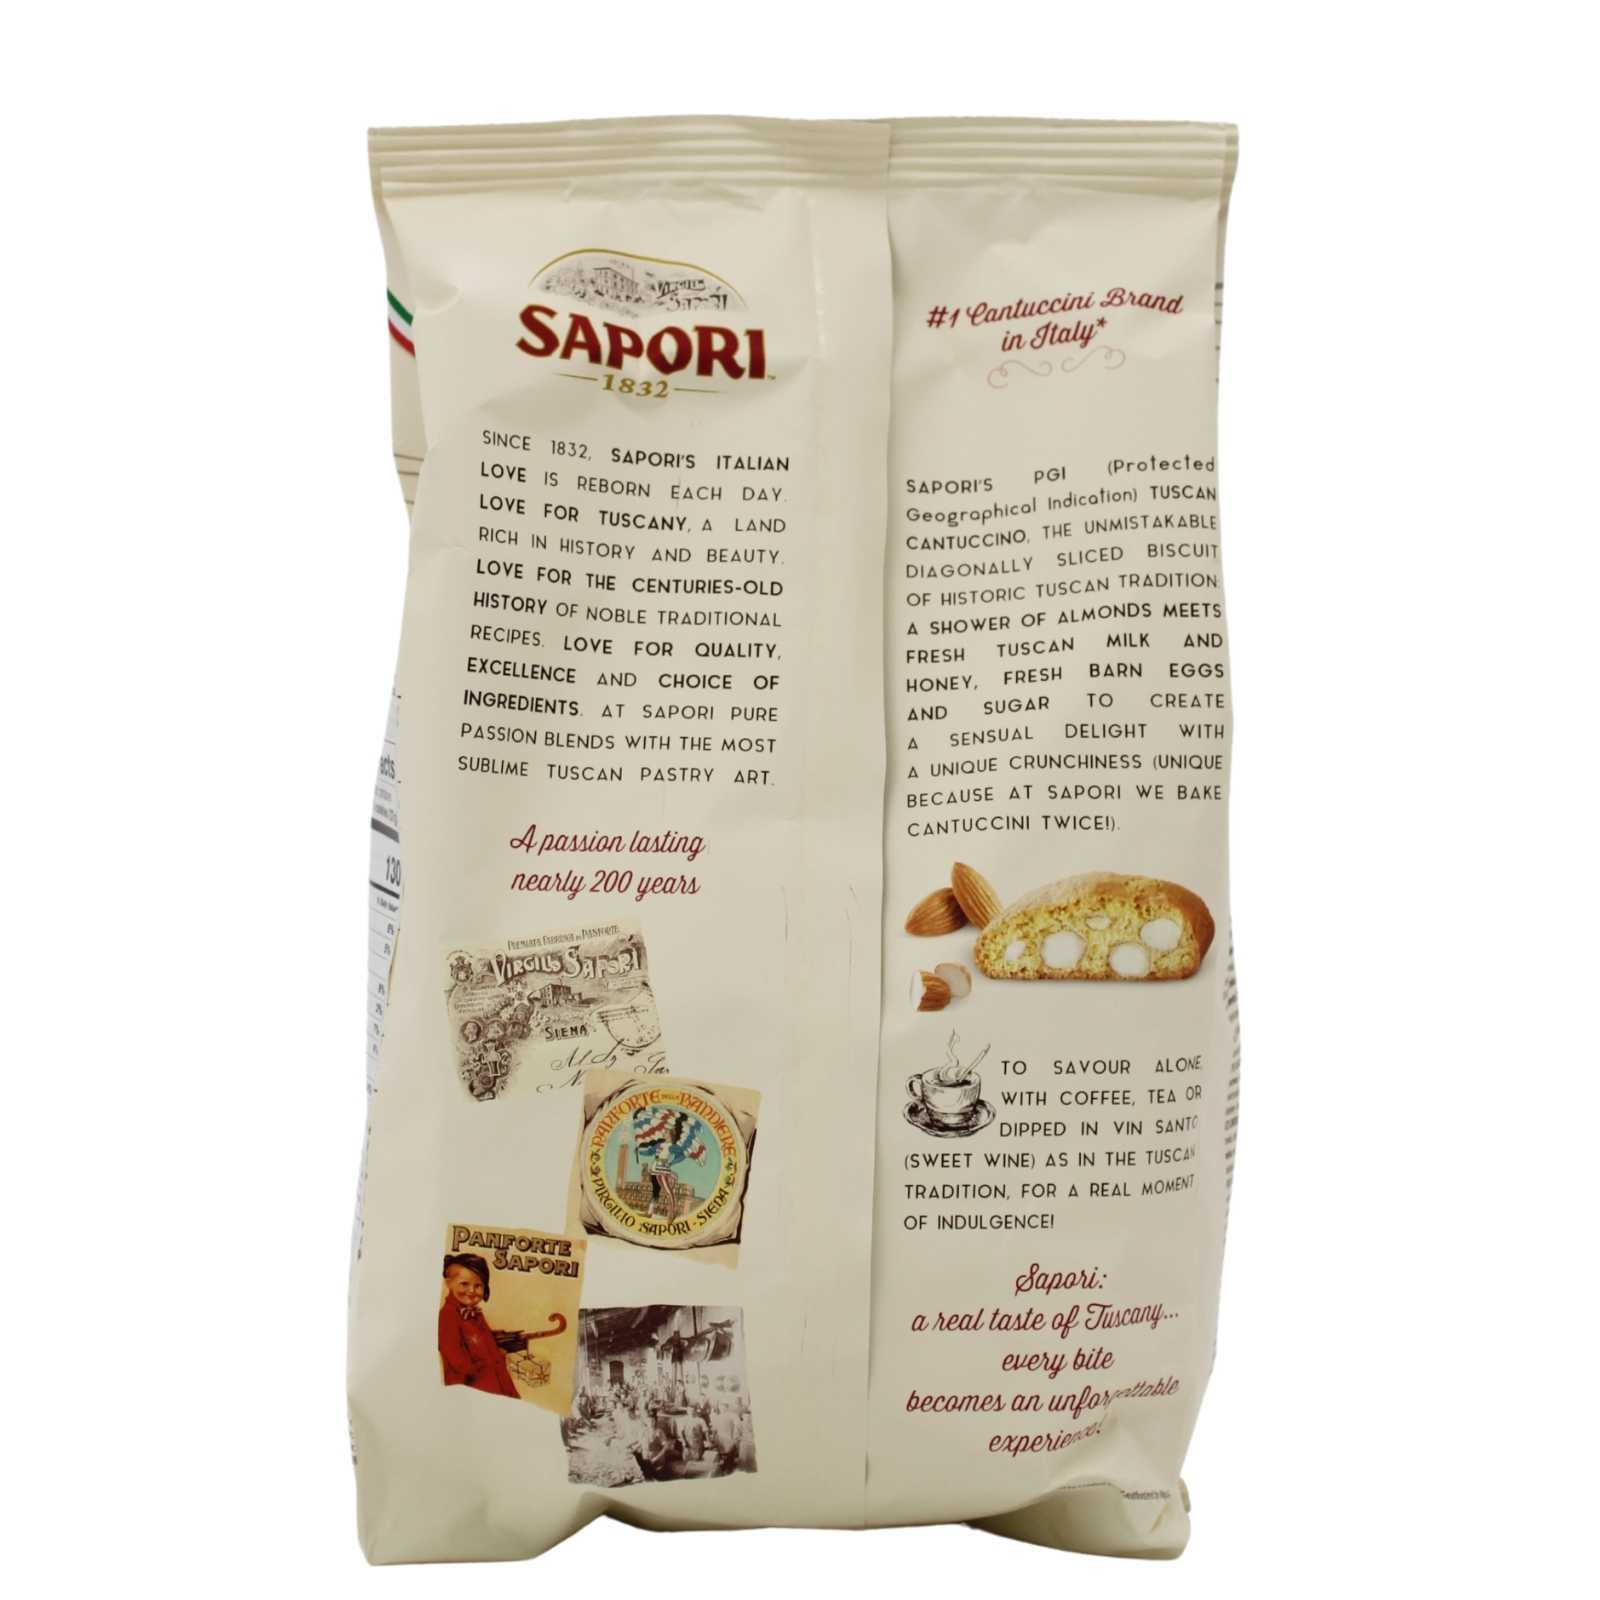 Sapori Cantuccini (Biscotti) back